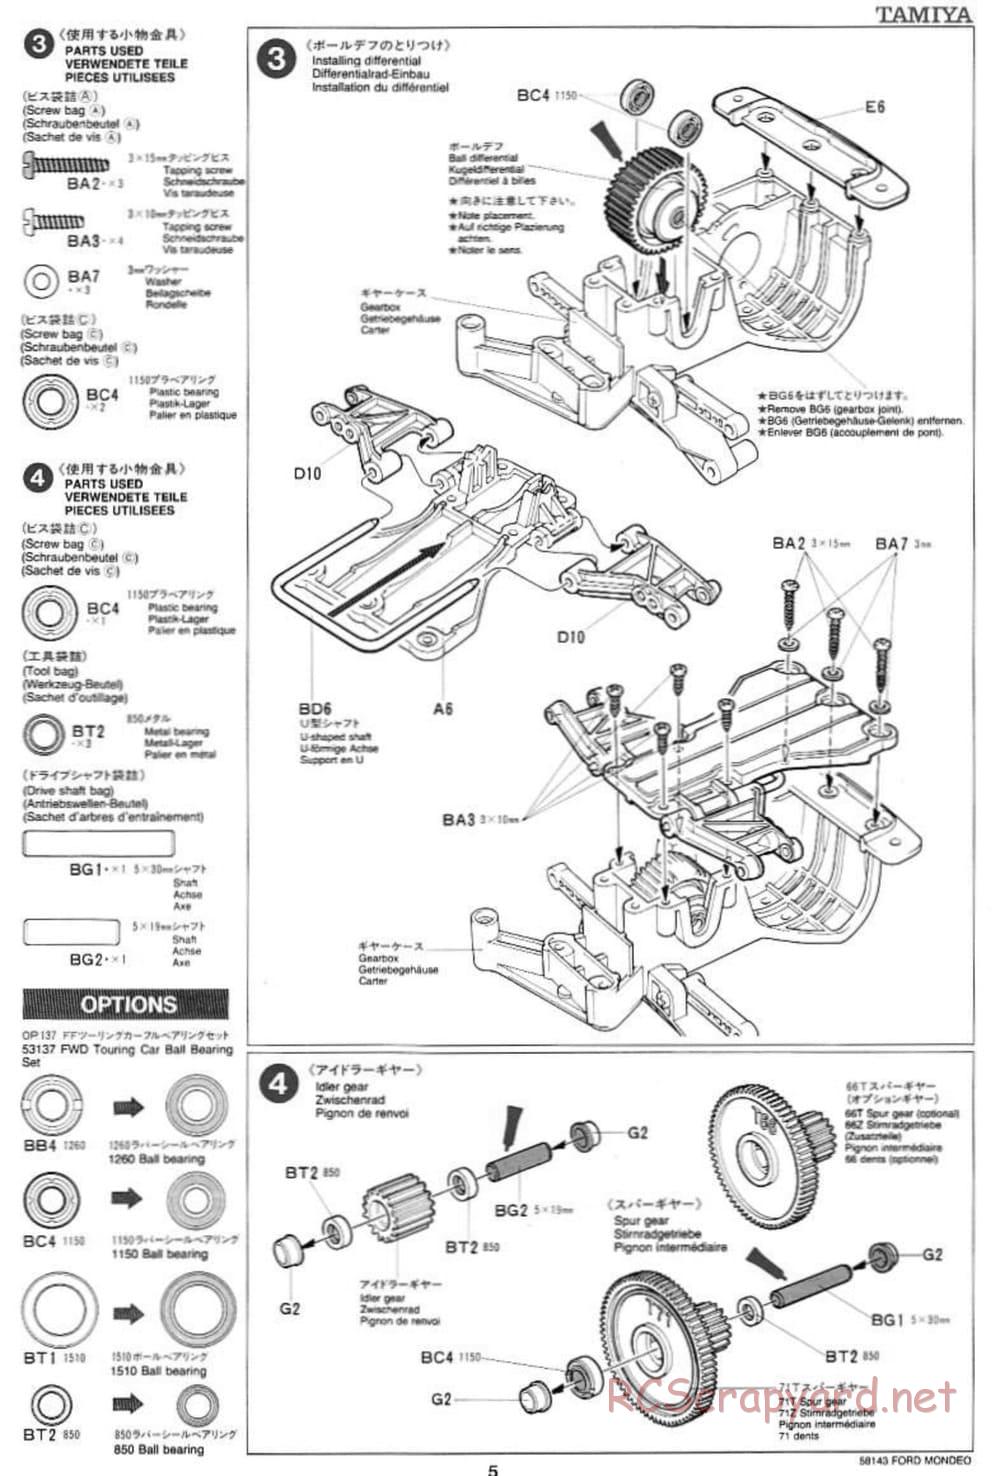 Tamiya - Ford Mondeo BTCC - FF-01 Chassis - Manual - Page 5